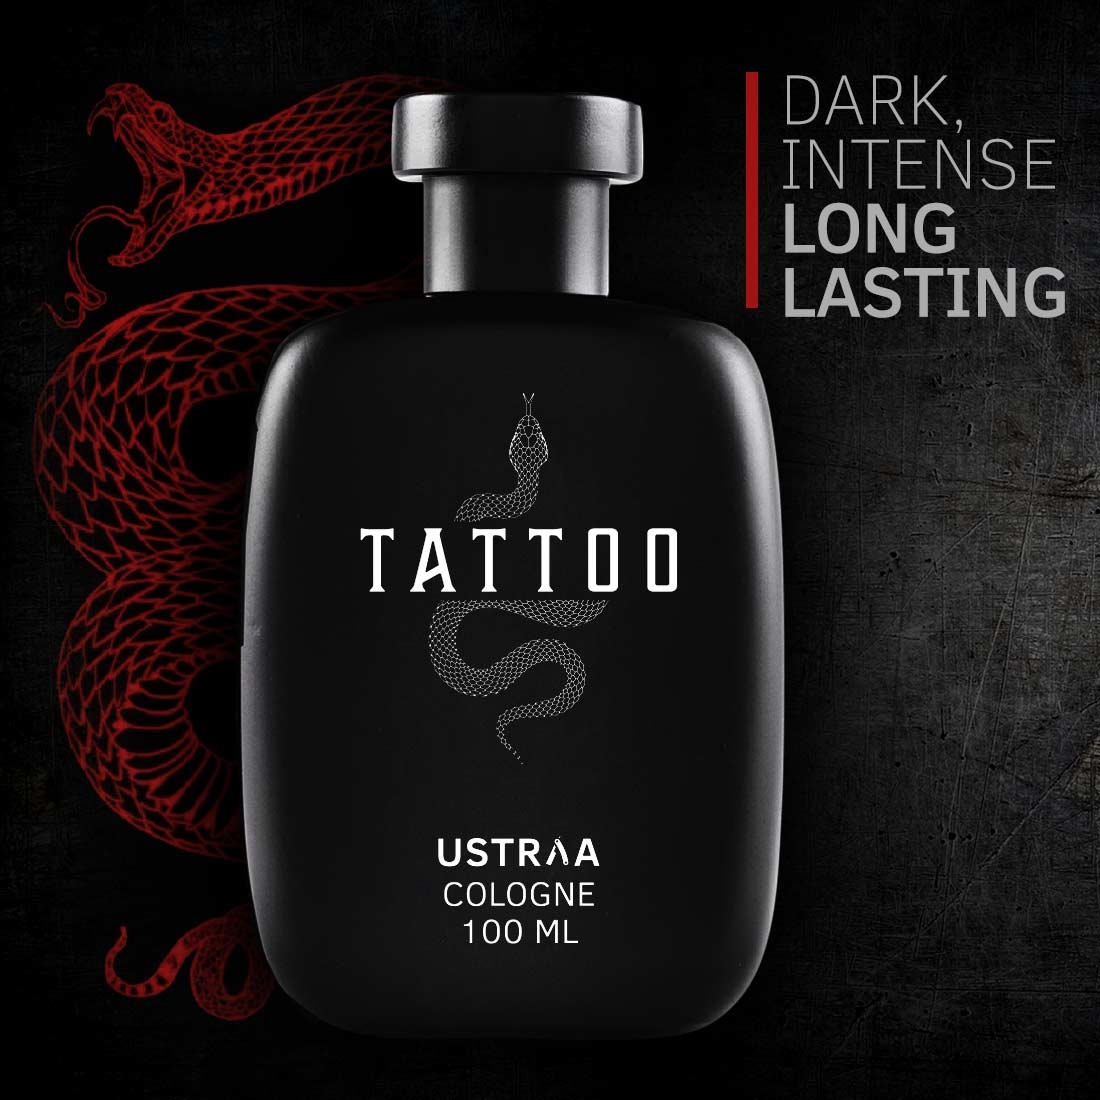 Ustraa Ayurvedic Beard Growth Oil -100ml & Cologne Tattoo - 100ml- Perfume for men